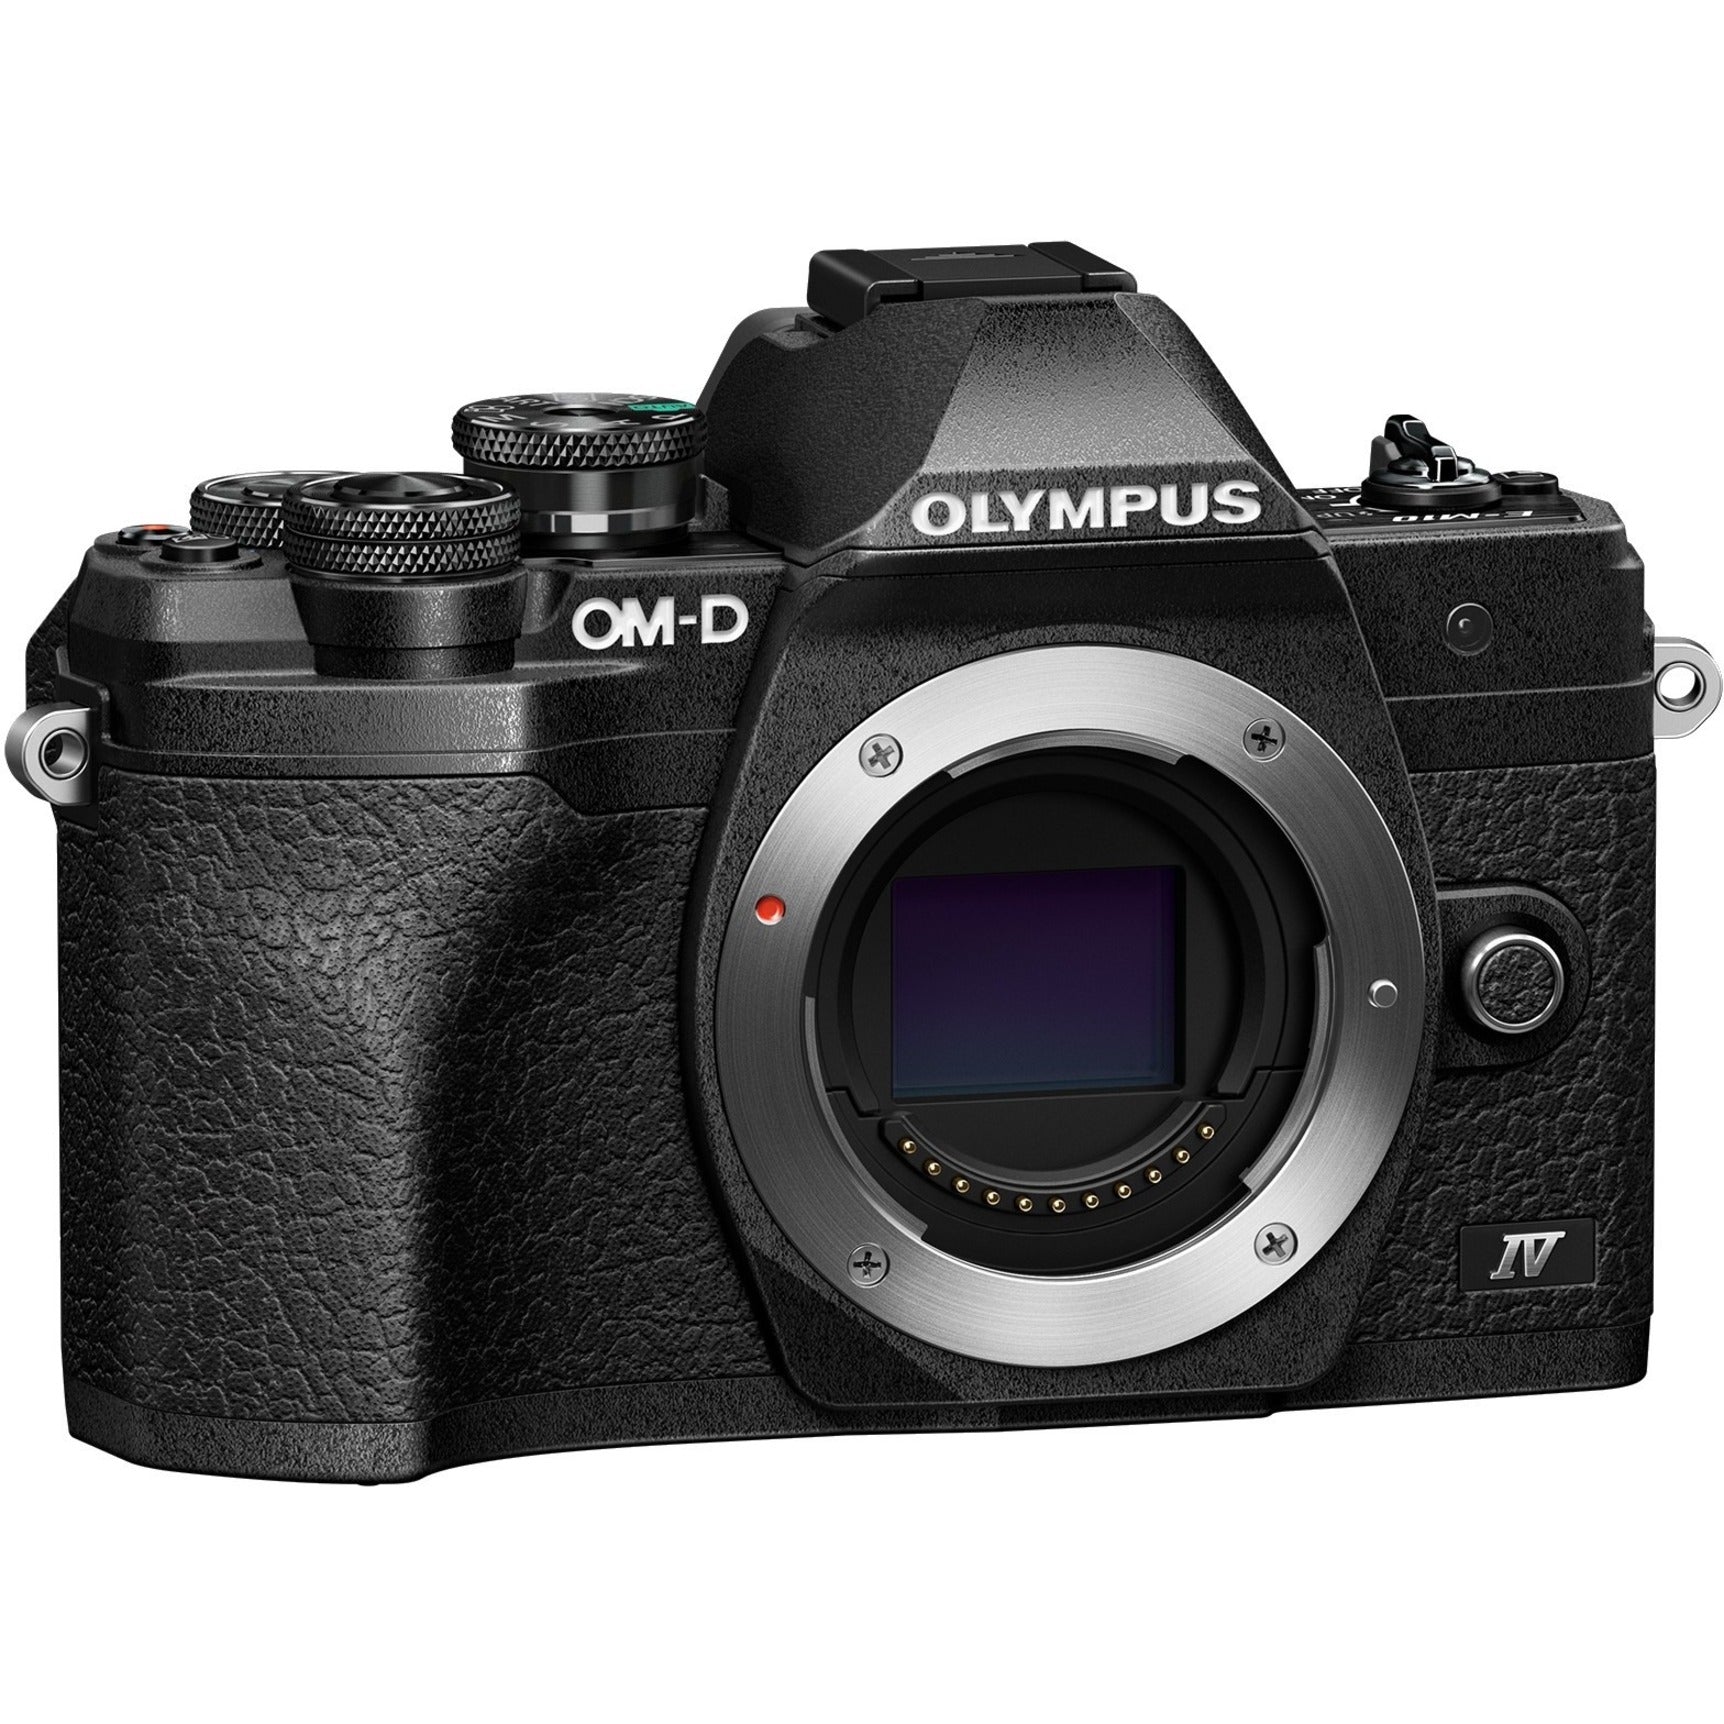 Olympus V207130BU000 OM-D E-M10 Mark IV Mirrorless Camera Body Only, 20.3 Megapixel, Black